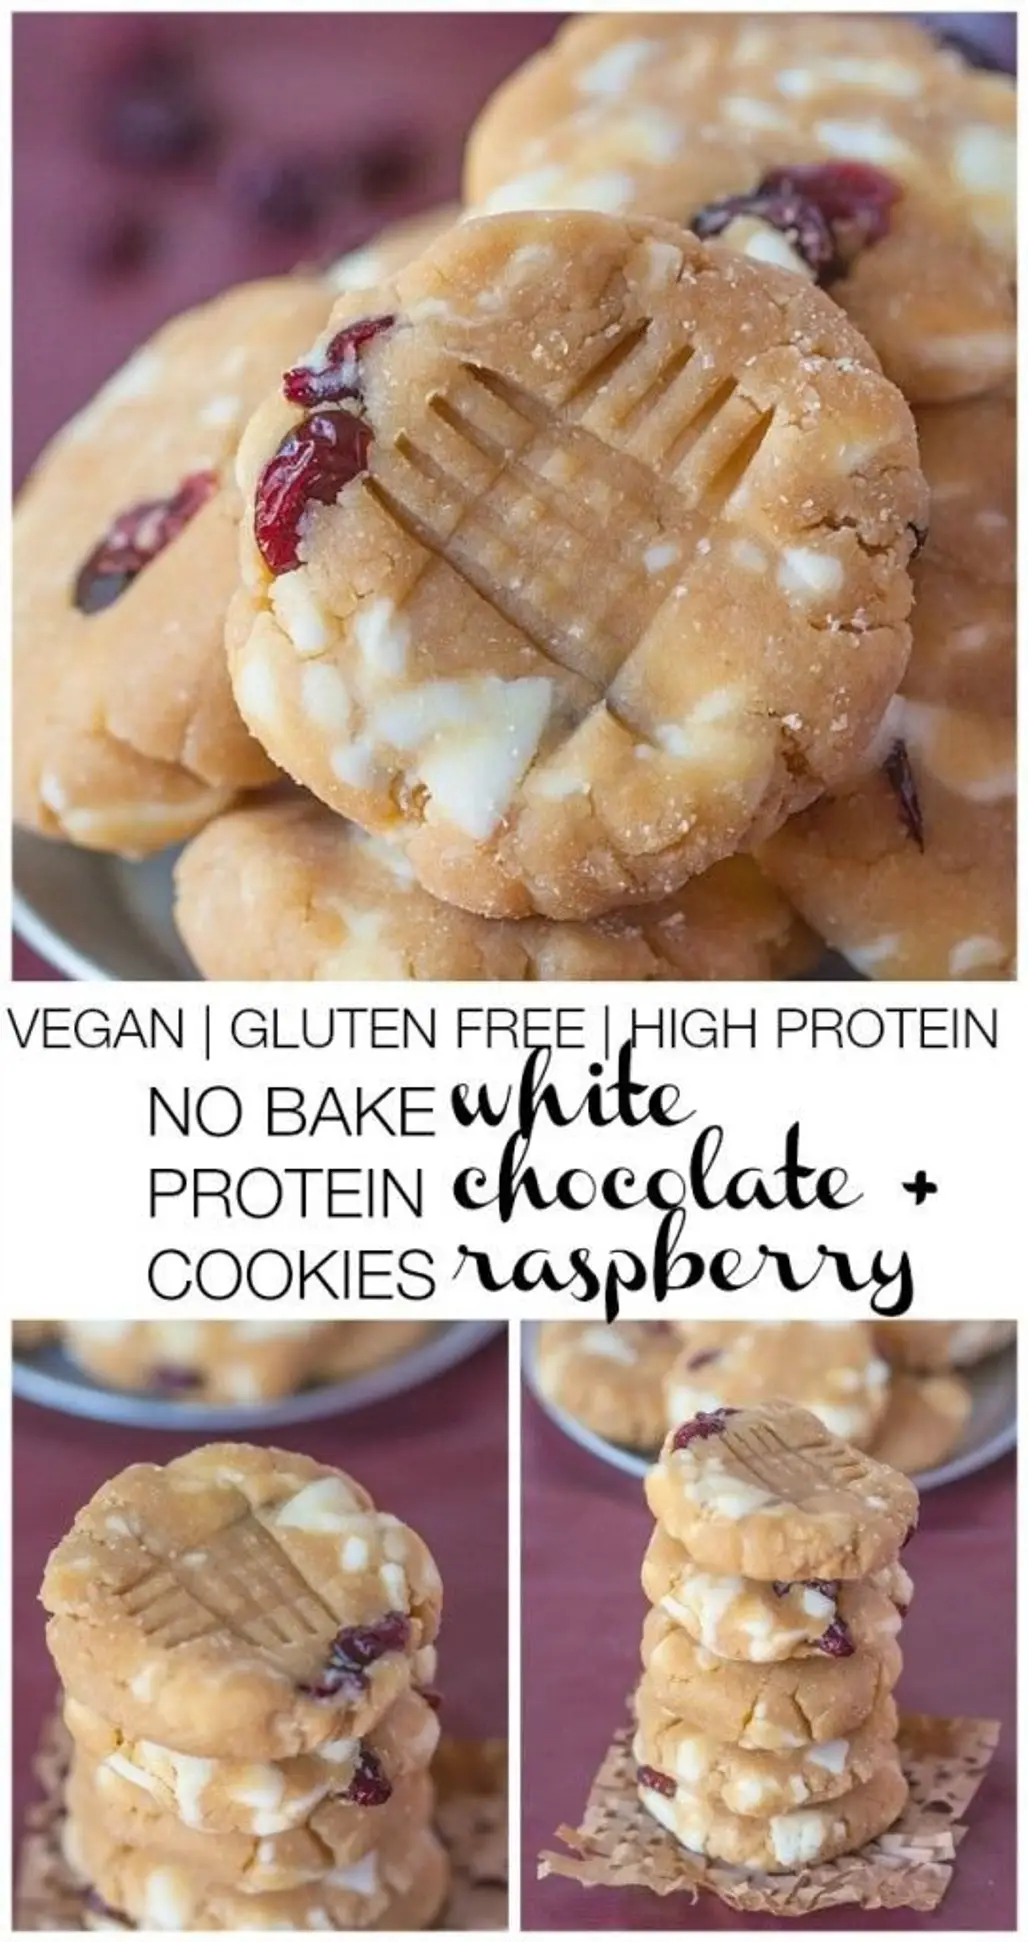 Healthy No Bake White Chocolate Raspberry Protein Cookies (Vegan & Gluten-free)